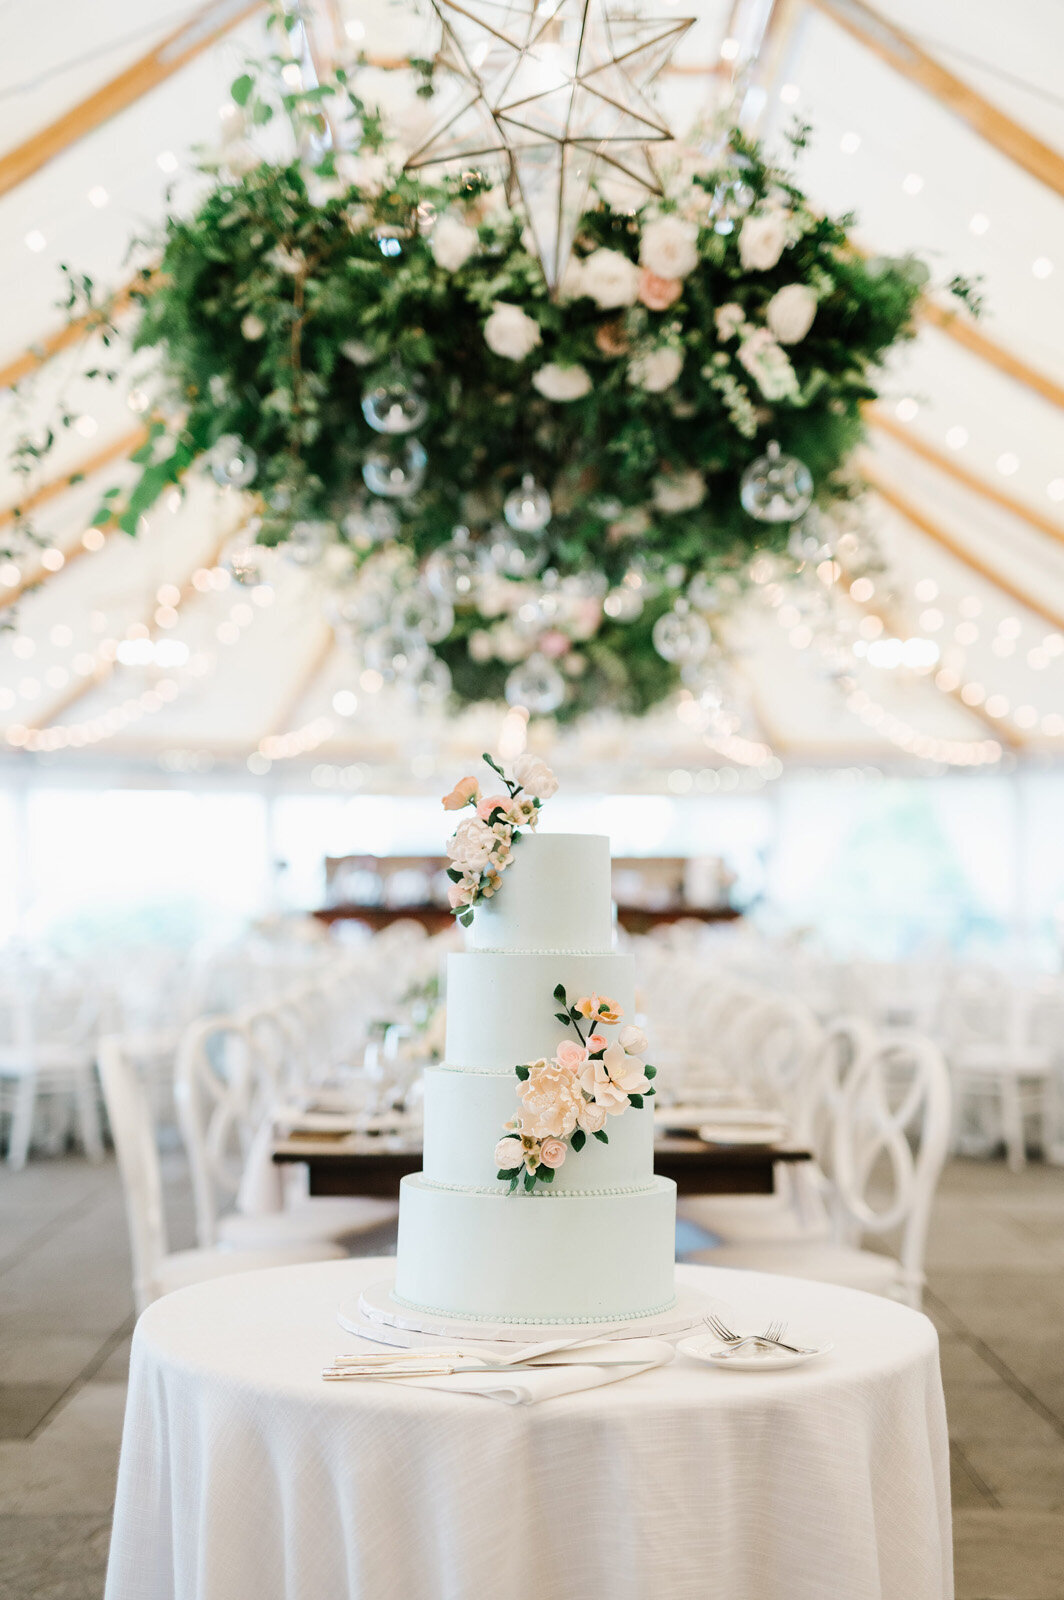 Kate-Murtaugh-Events-Newport-RI-Castle-Hill-Inn-floral-centerpiece-wedding-planner-blue-cake